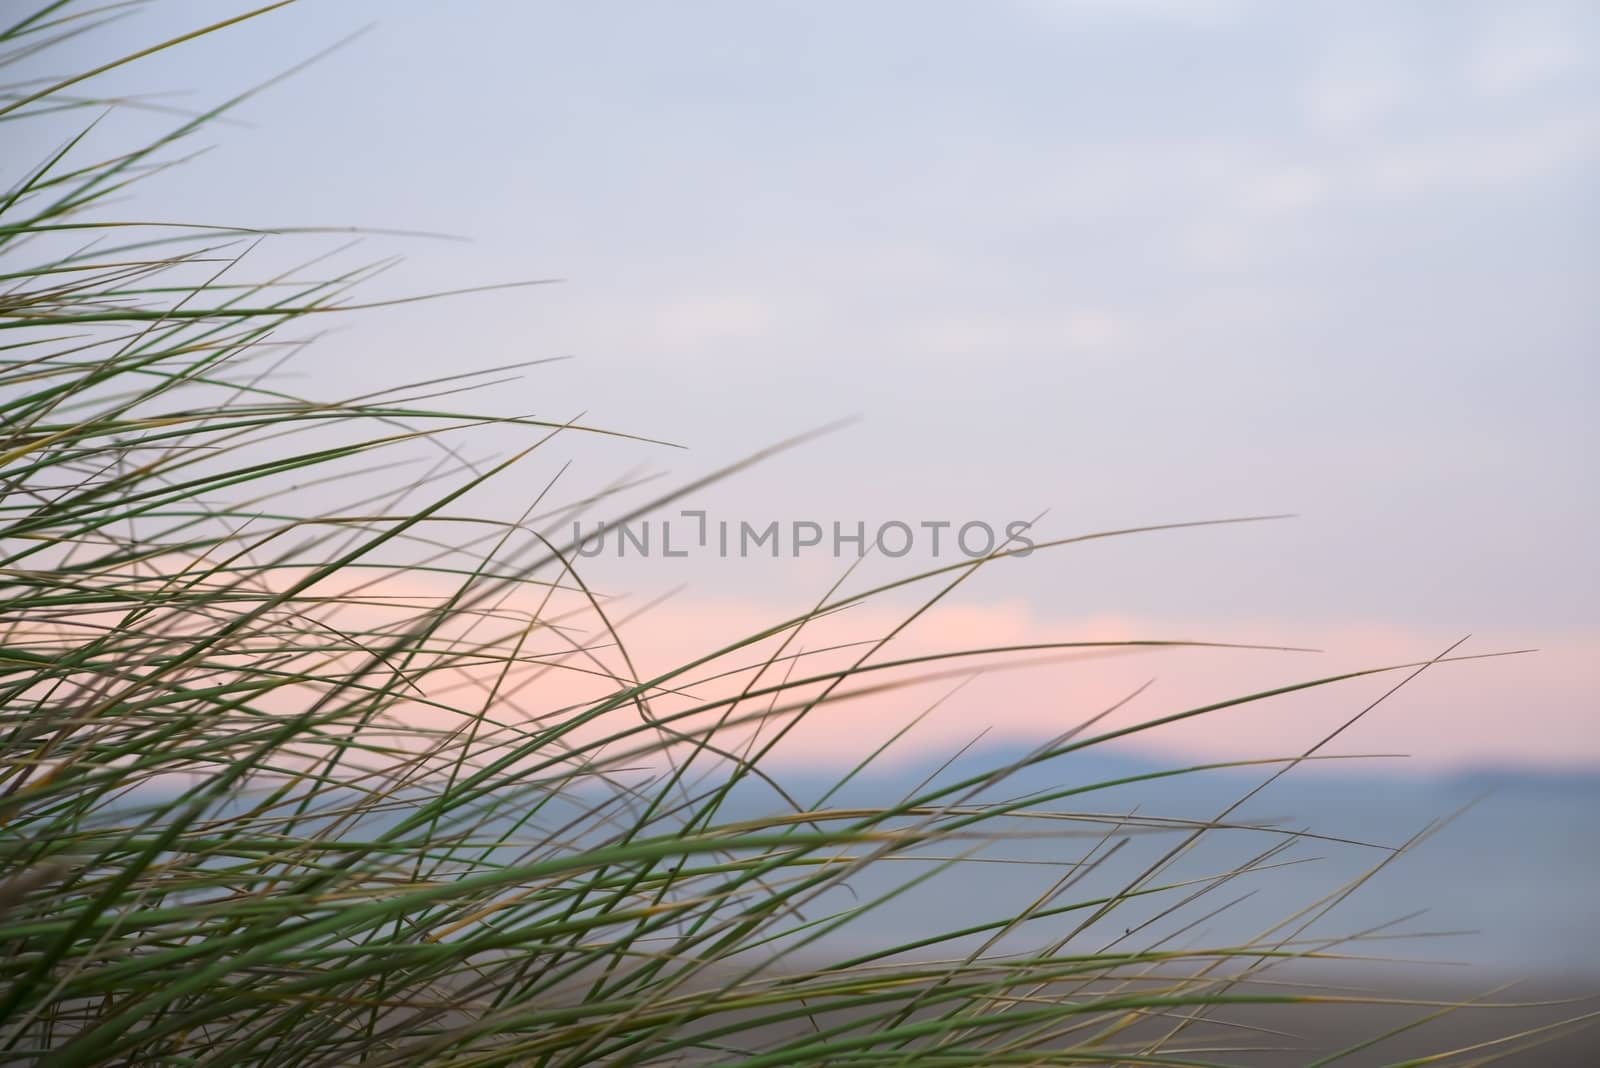 wild dune grass in beal kerry on the wild atlantic way